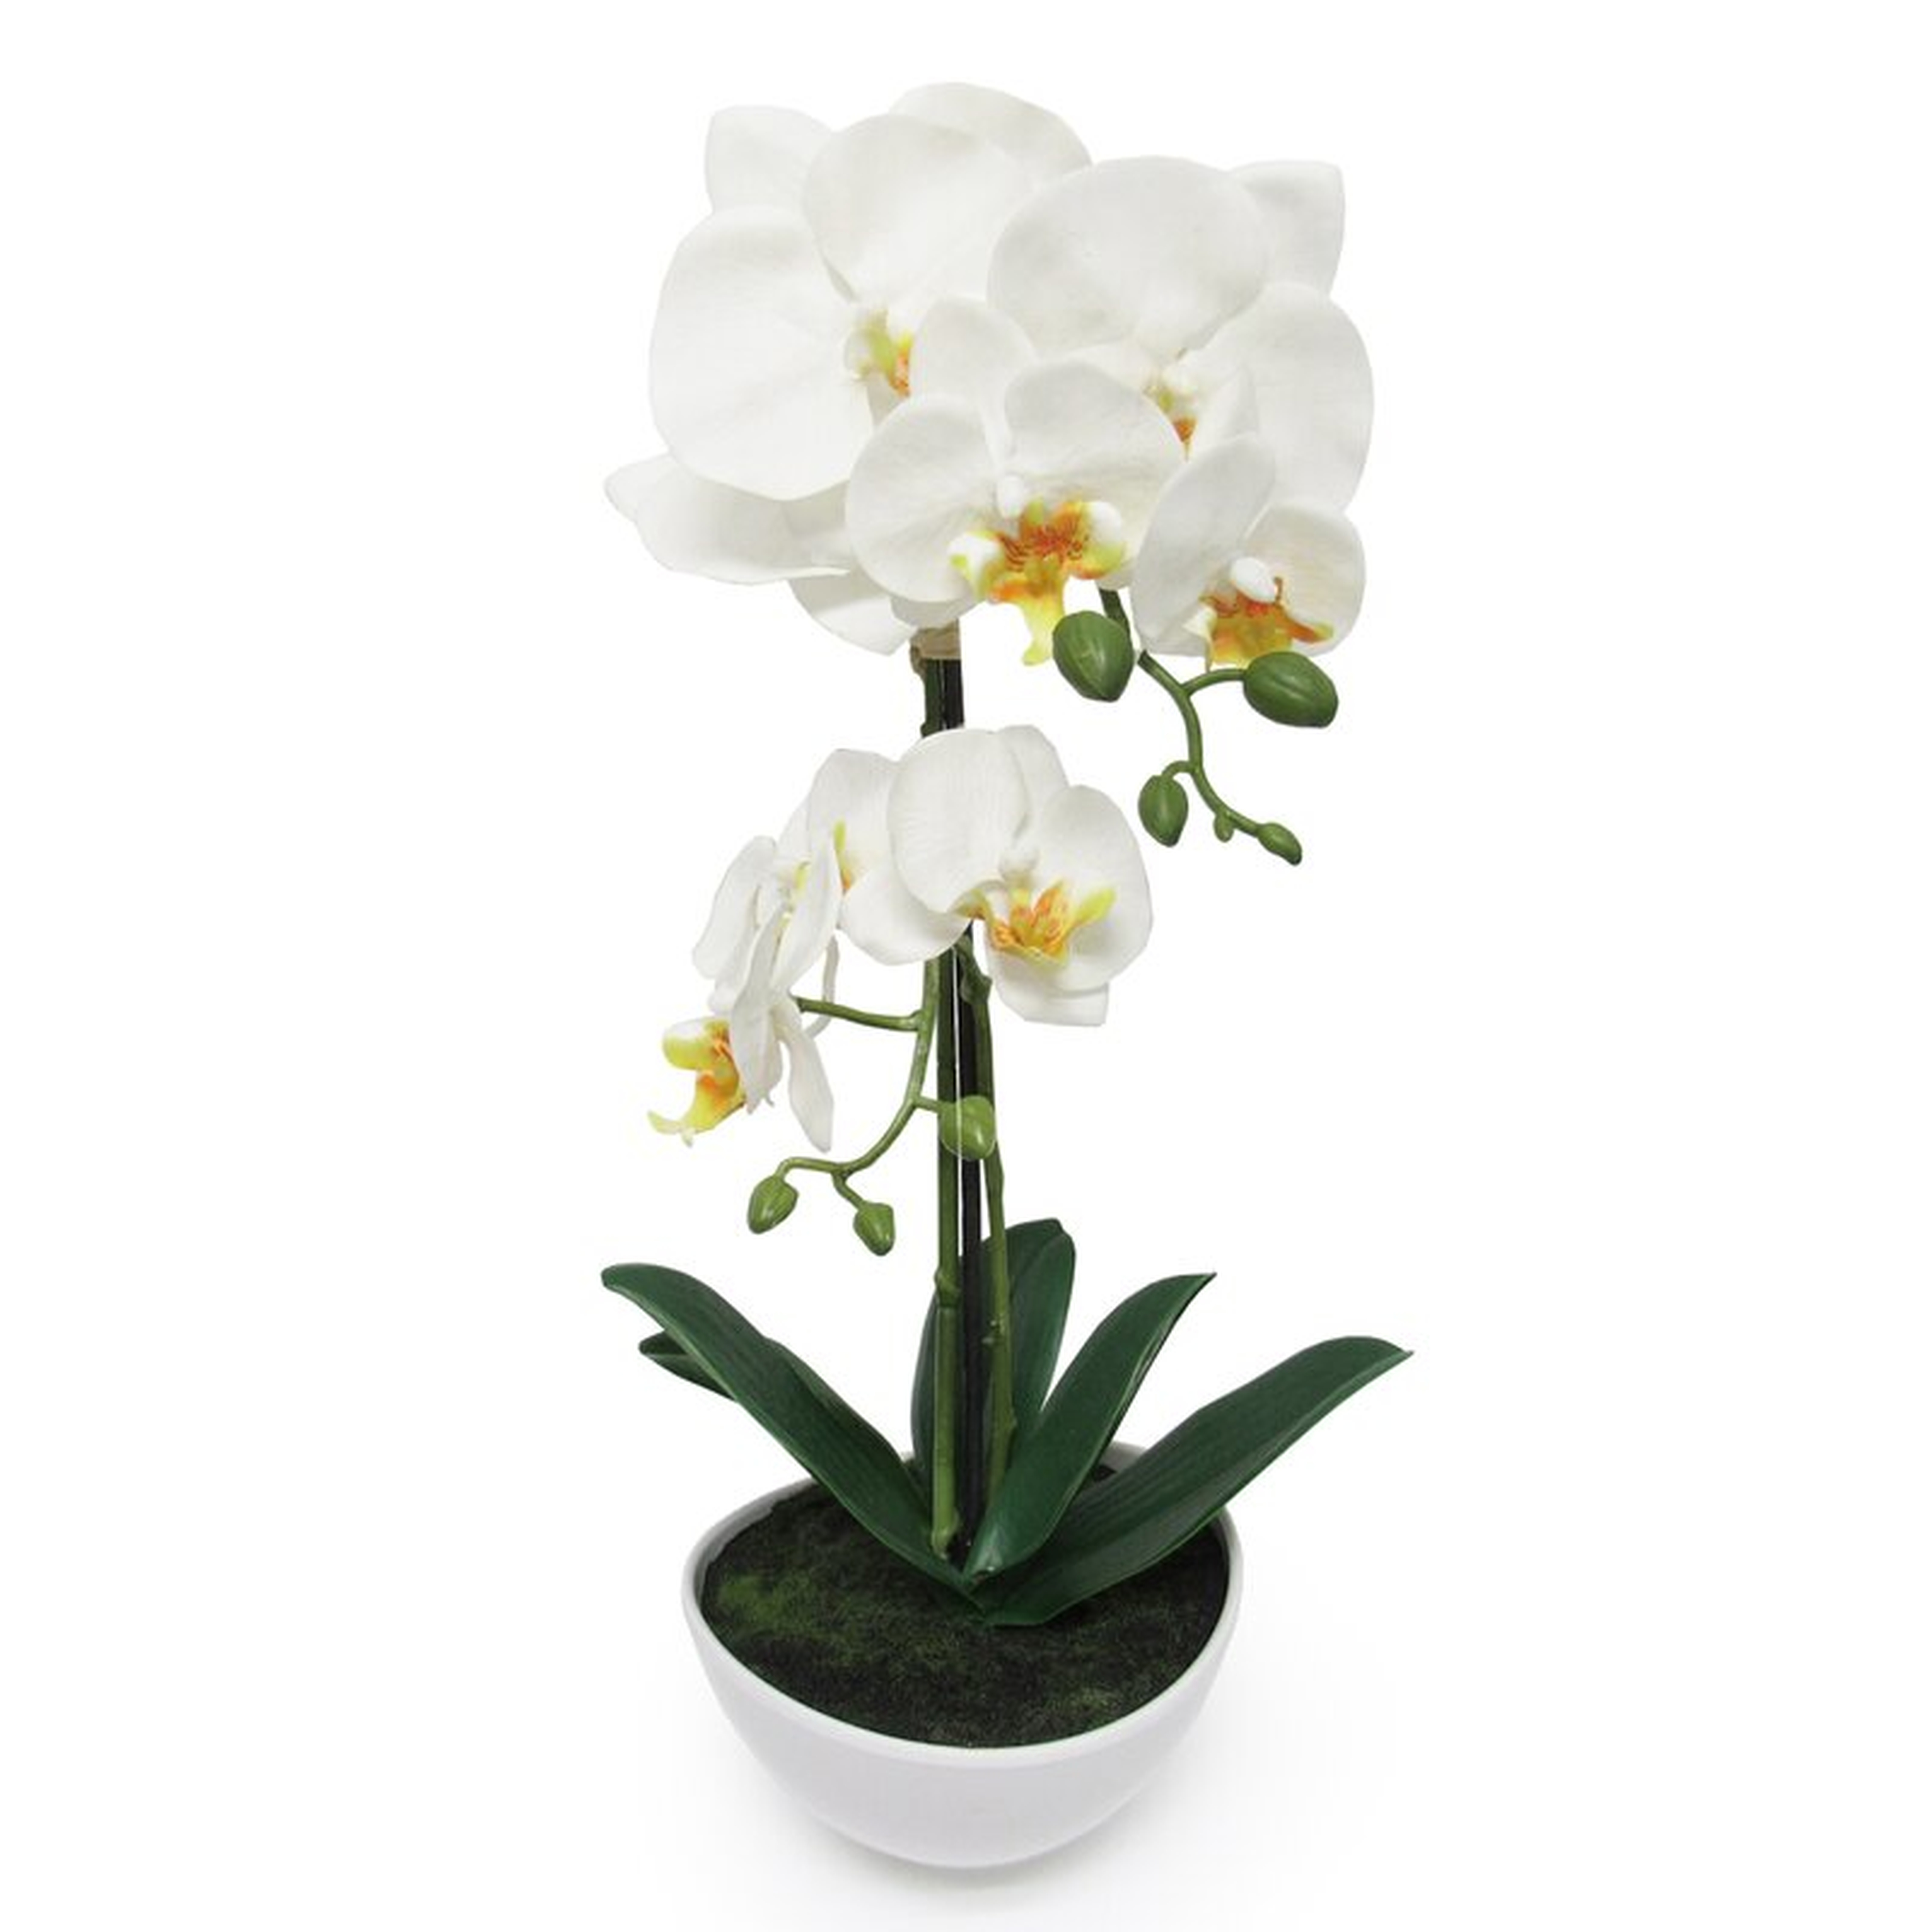 Phalaenopsis Orchid Flower Arrangements in Planter - Wayfair